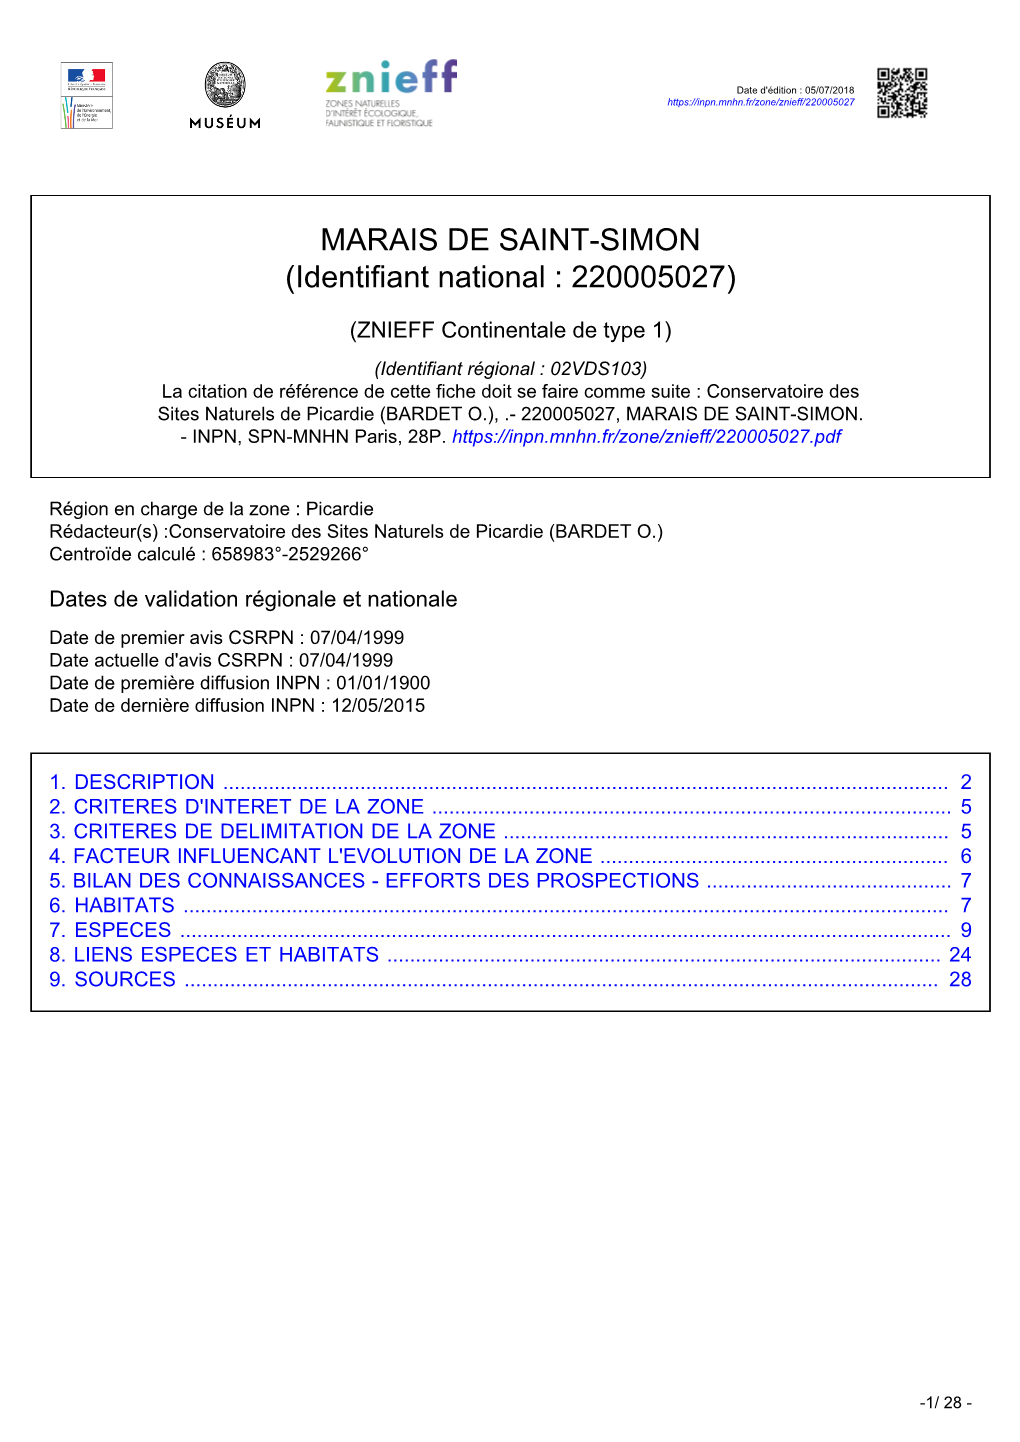 MARAIS DE SAINT-SIMON (Identifiant National : 220005027)